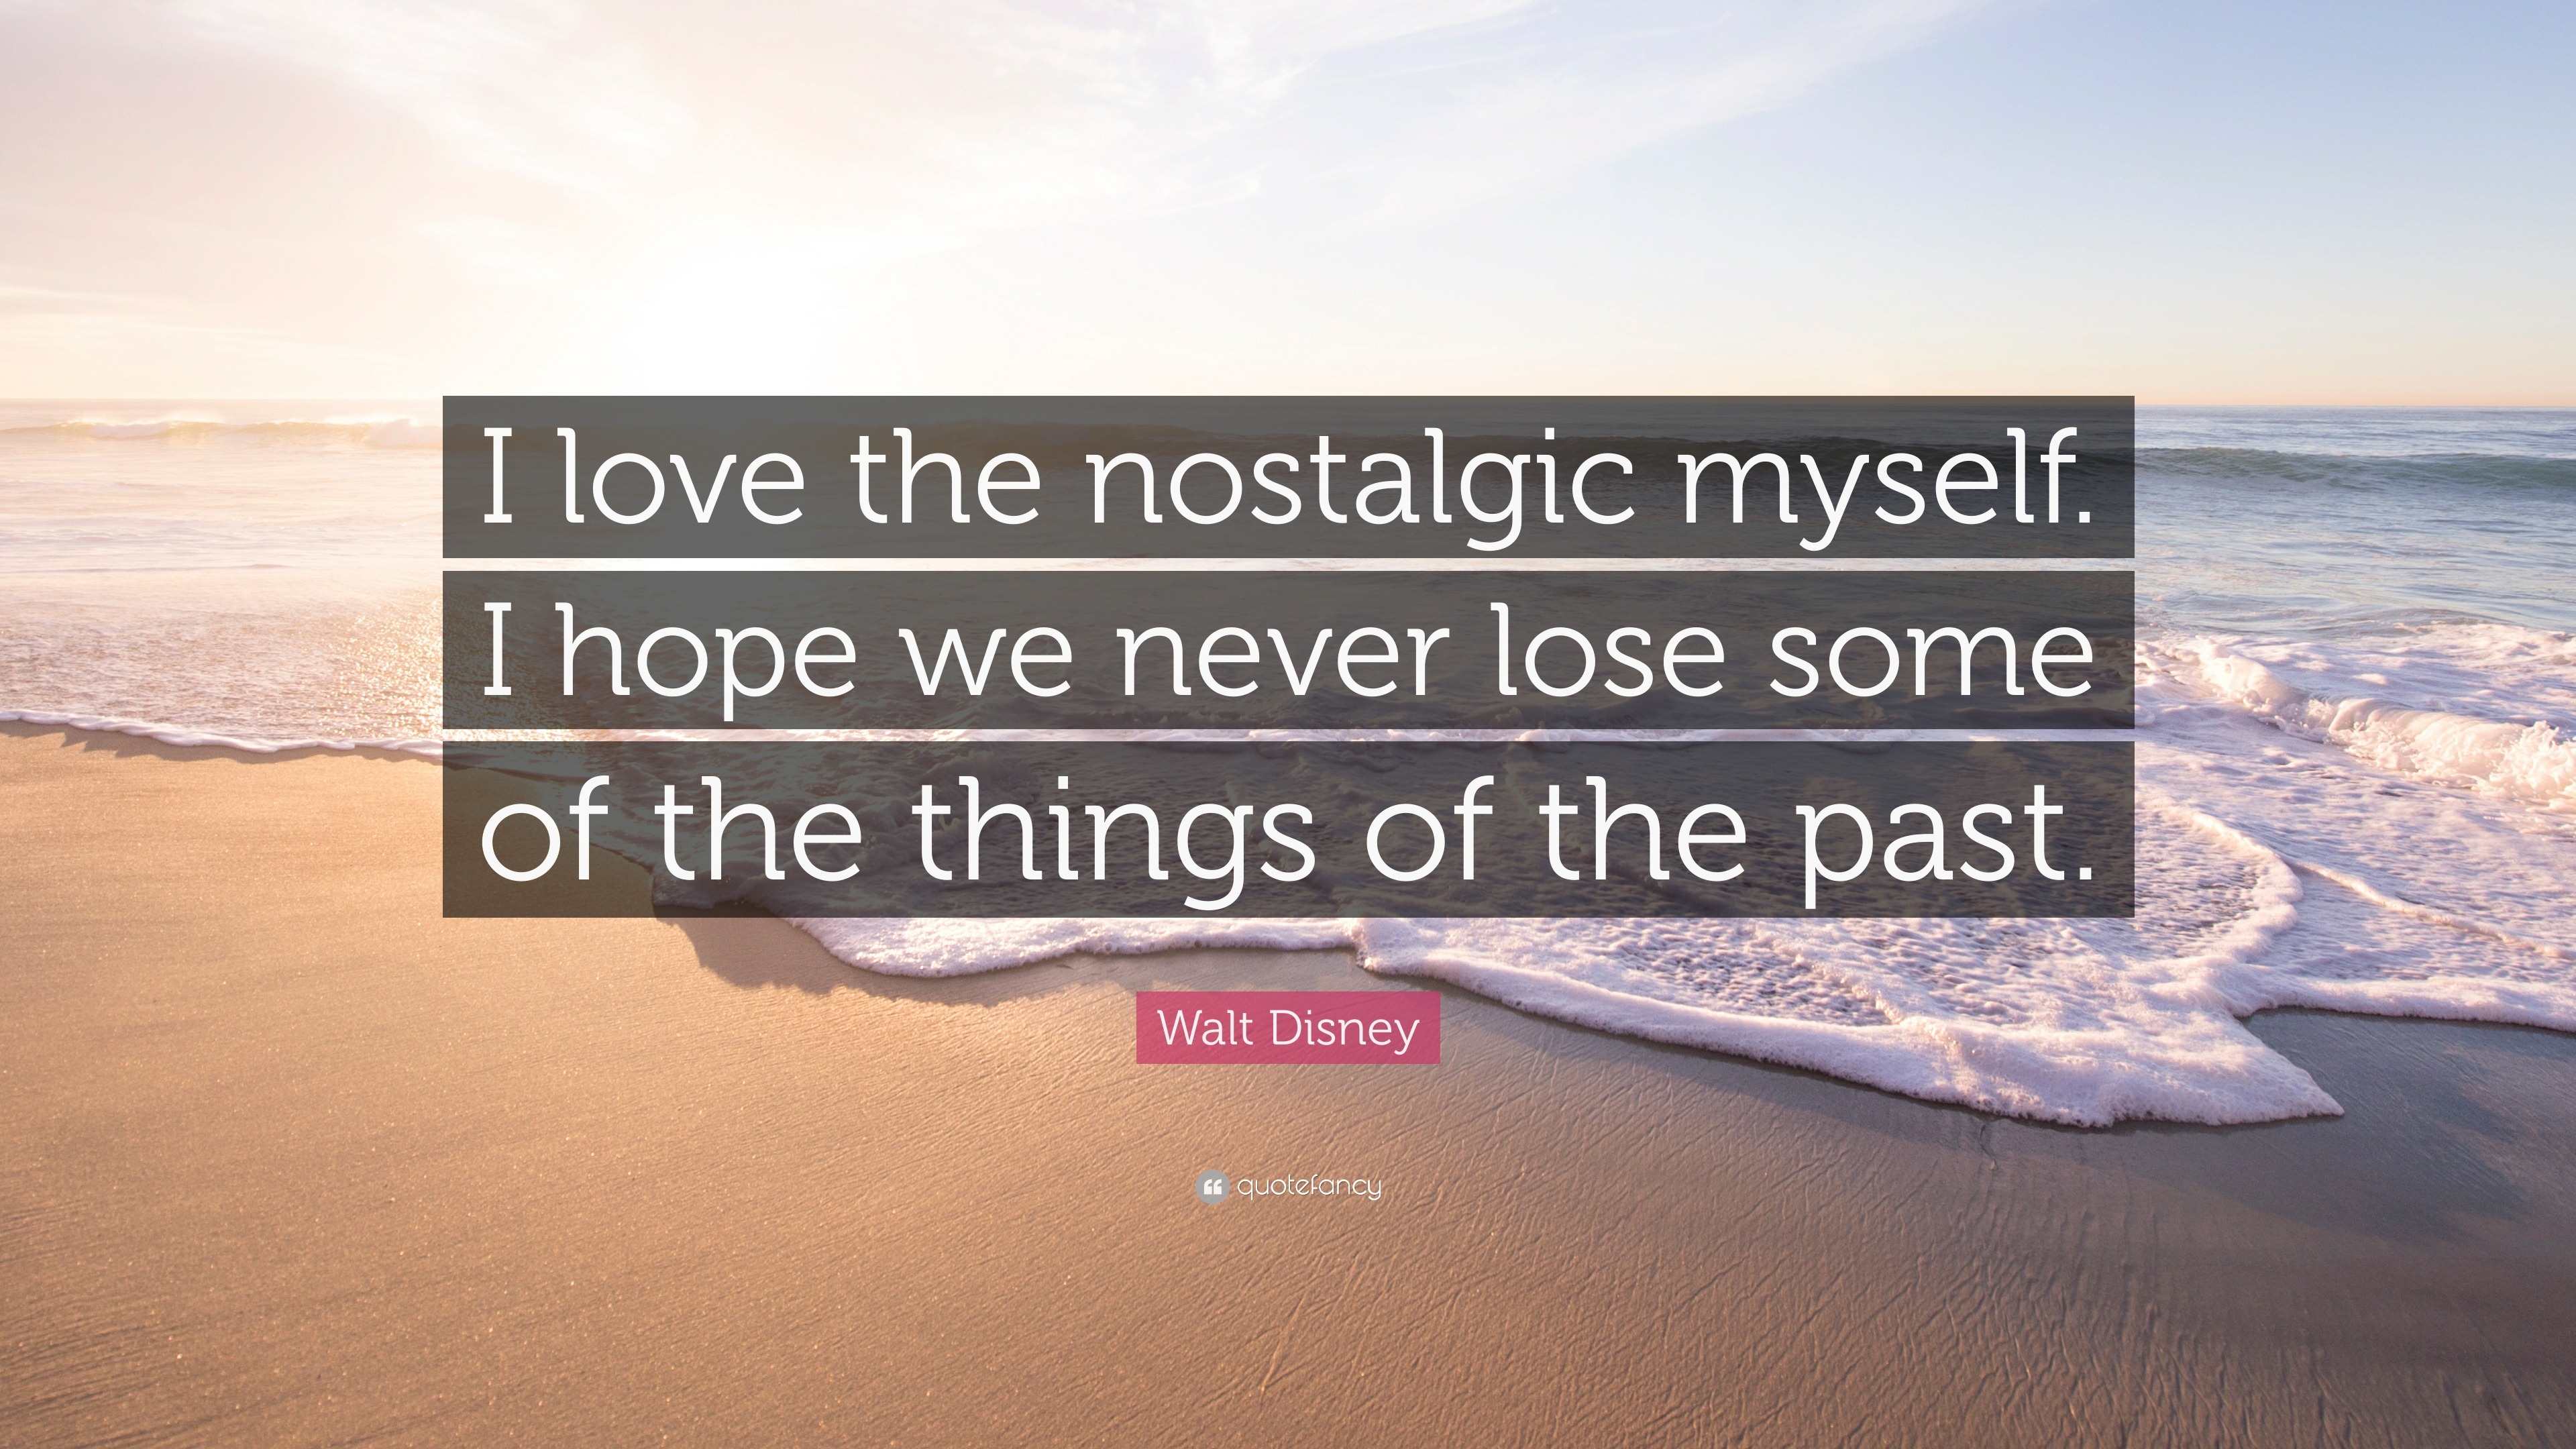 Walt Disney Quote “I love the nostalgic myself I hope we never lose